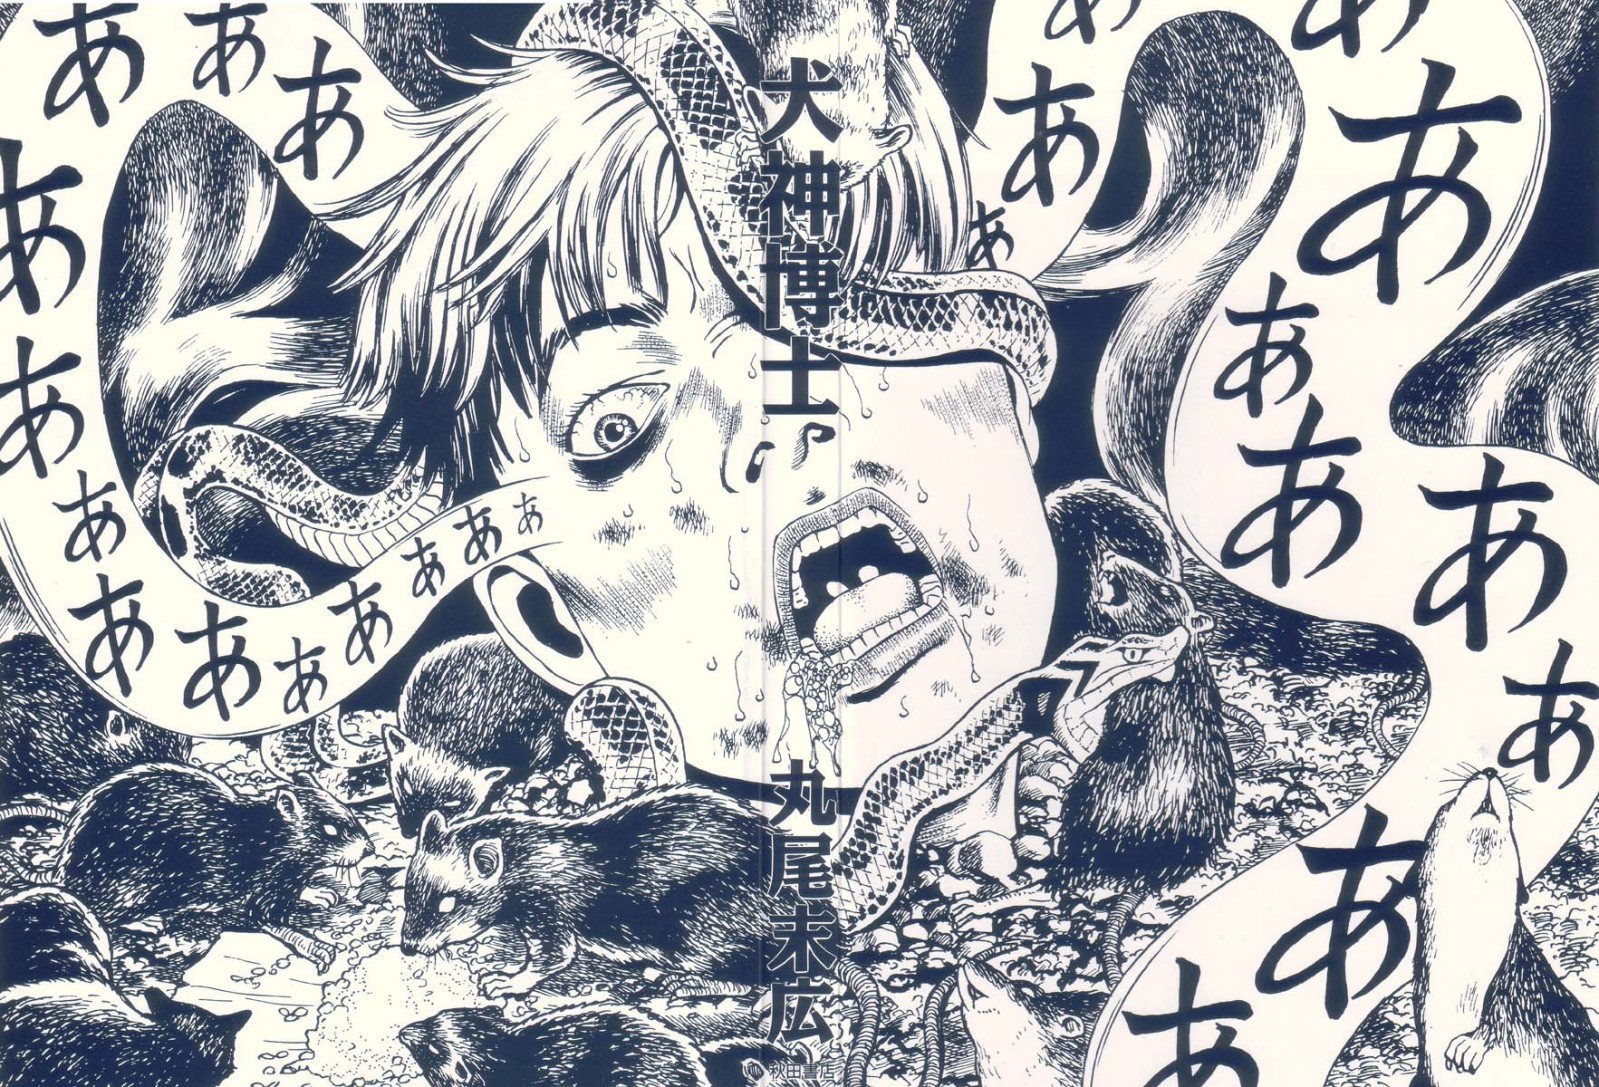 General 1599x1087 eroguro manga Suehiro Maruo face rats anime open mouth